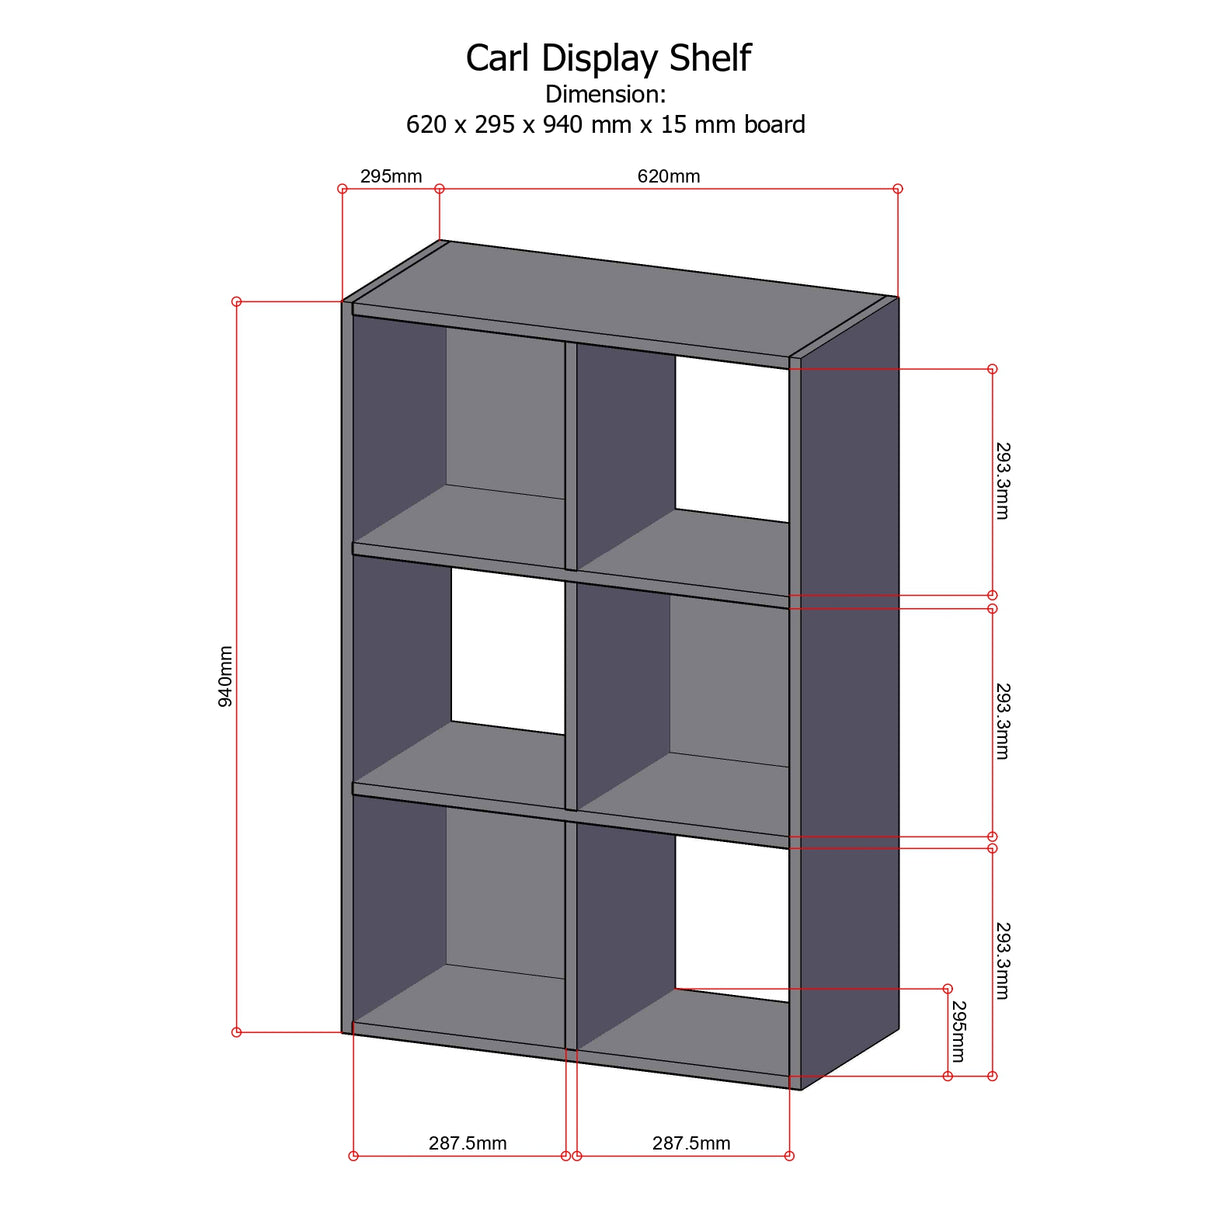 CARL Multipurpose Display Shelf Affordahome